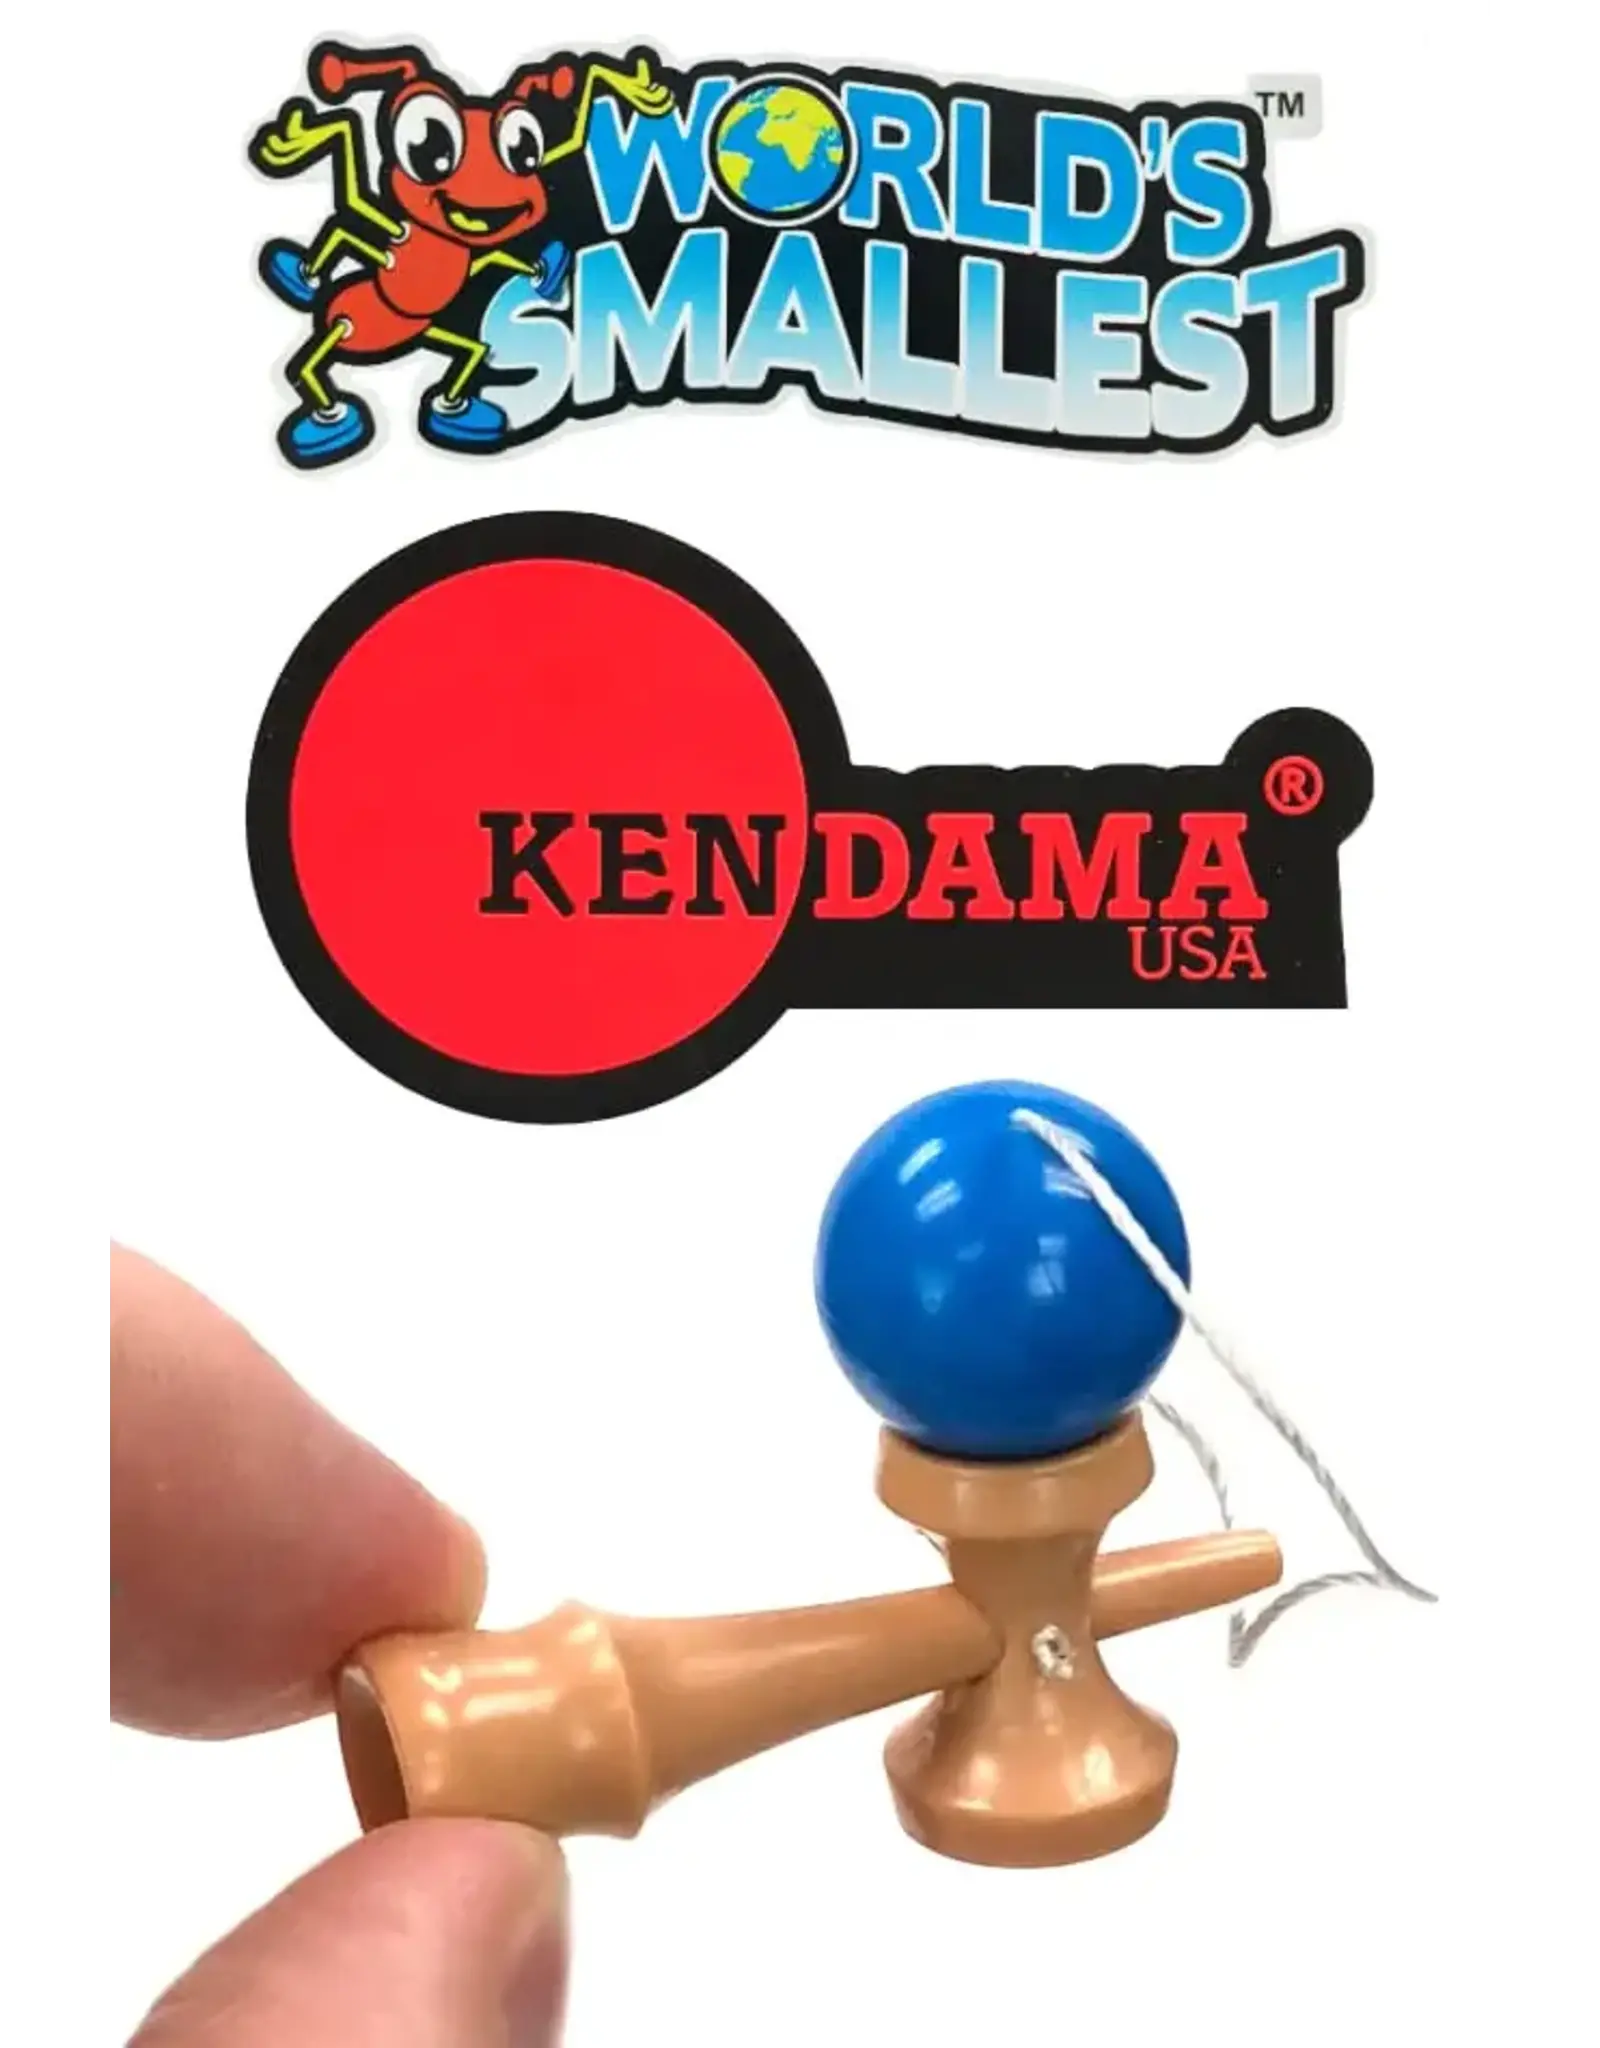 World’s Smallest Kendama